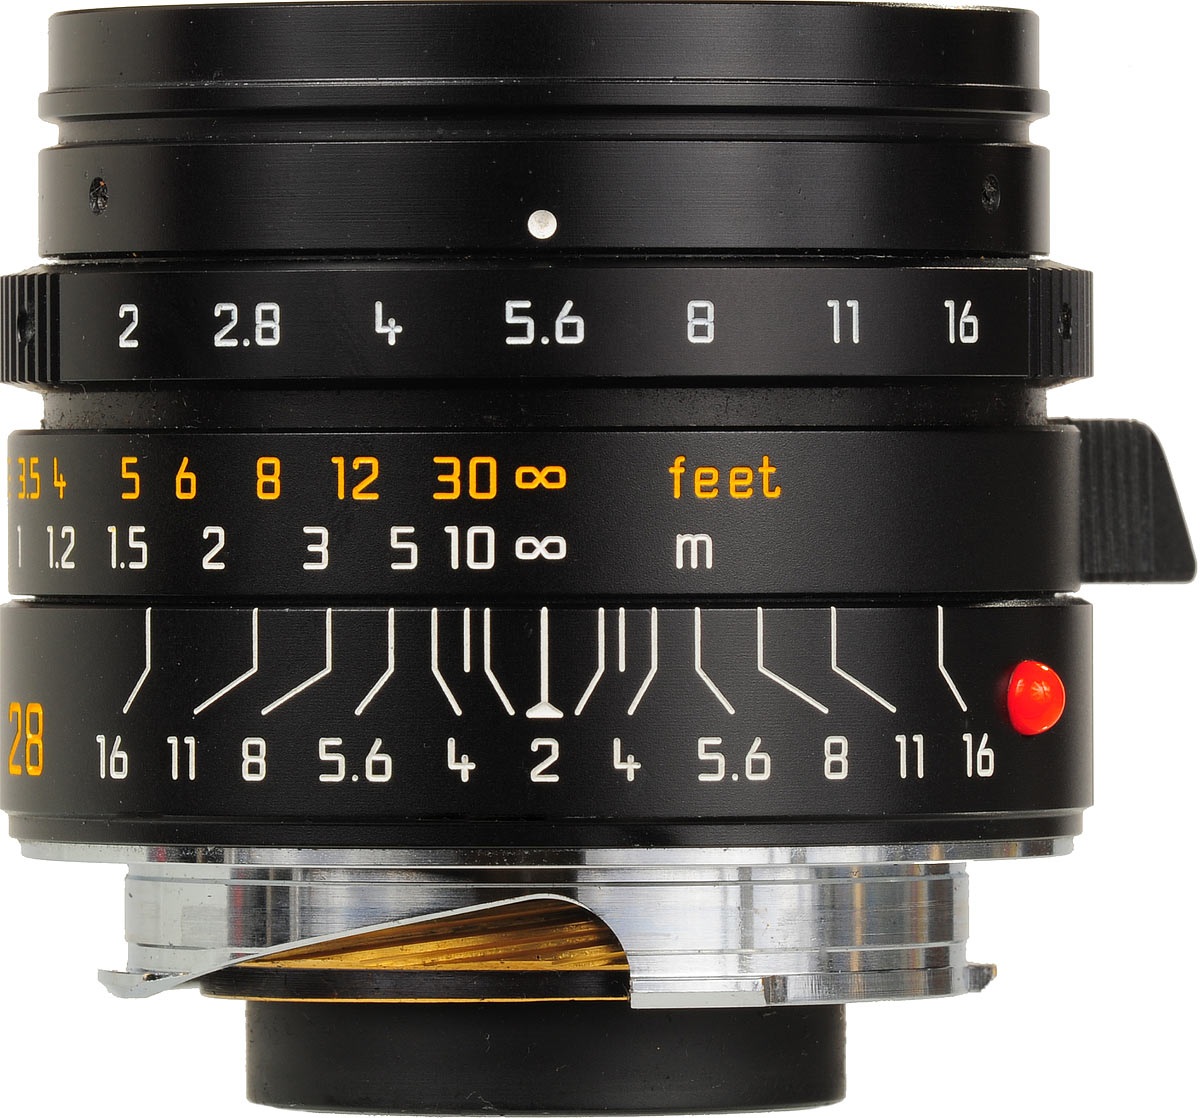 Ооо фут. Объектив Leica Elmar-s 180mm f/3.5 apo CS. New 28mm Leica f2. Leica Summicron r 50. Leica apo-Summicron-SL 90 f2 ASPH..